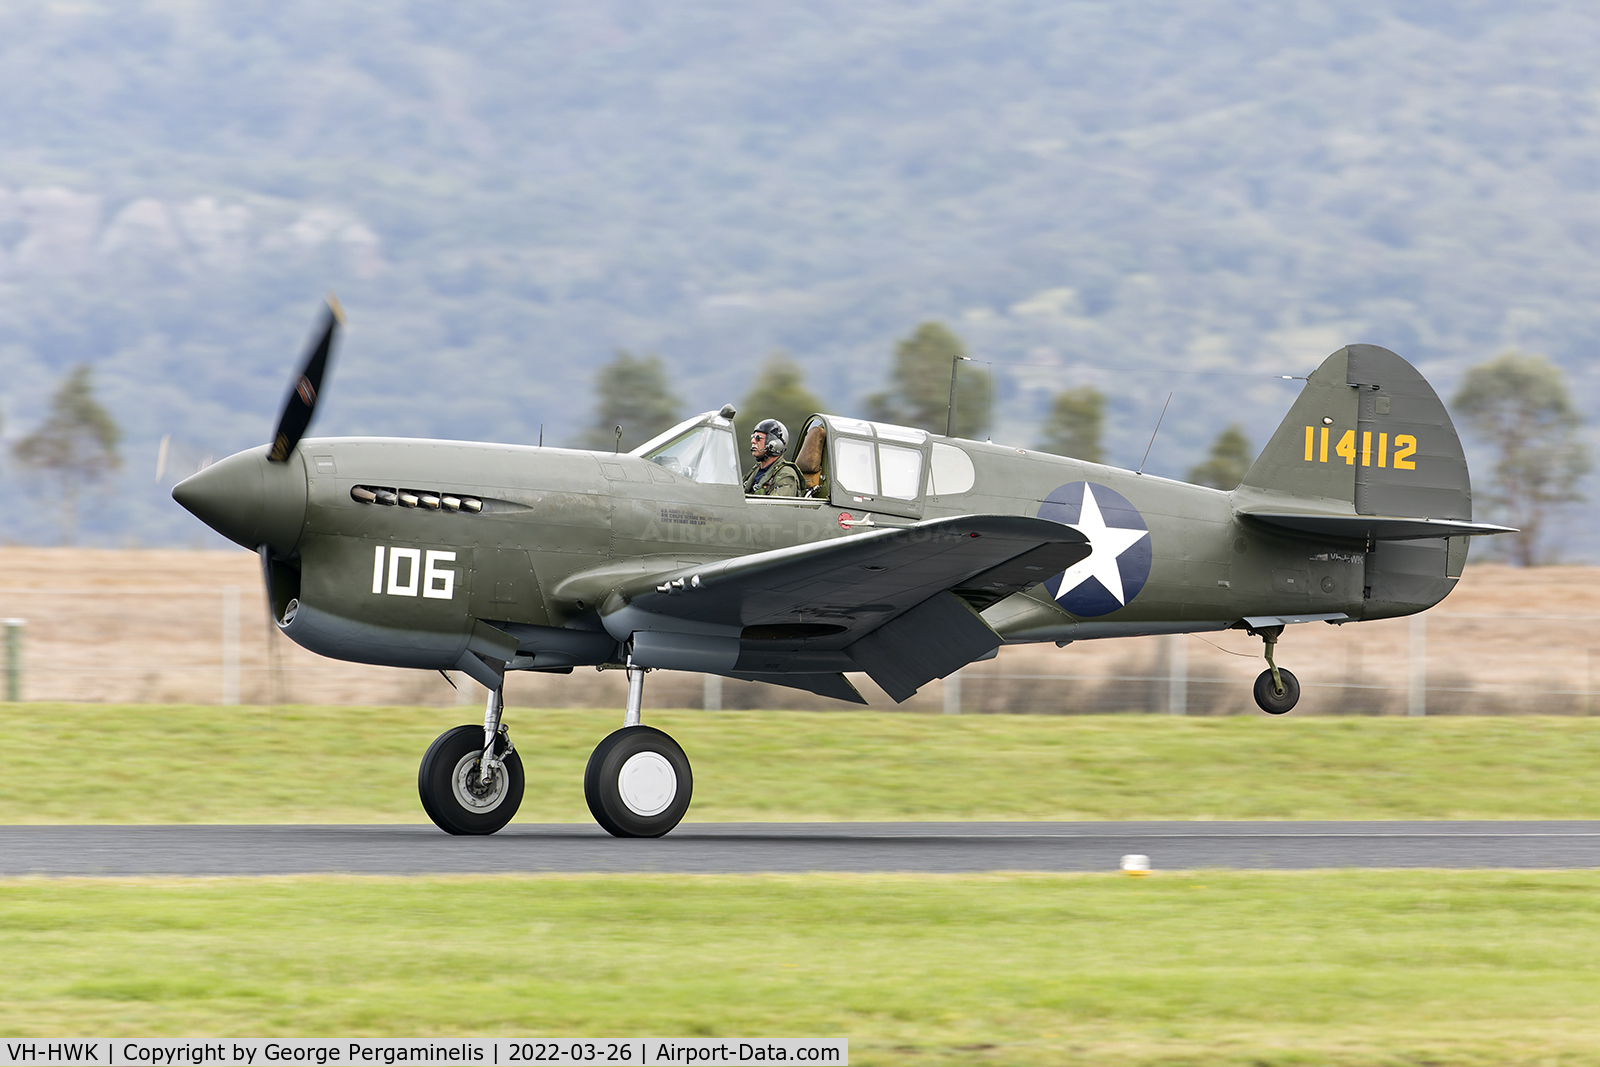 VH-HWK, 1941 Curtiss P-40F Warhawk C/N 41-14112, Warbirds Over Scone 2022. A rare RR Merlin-powered machine.